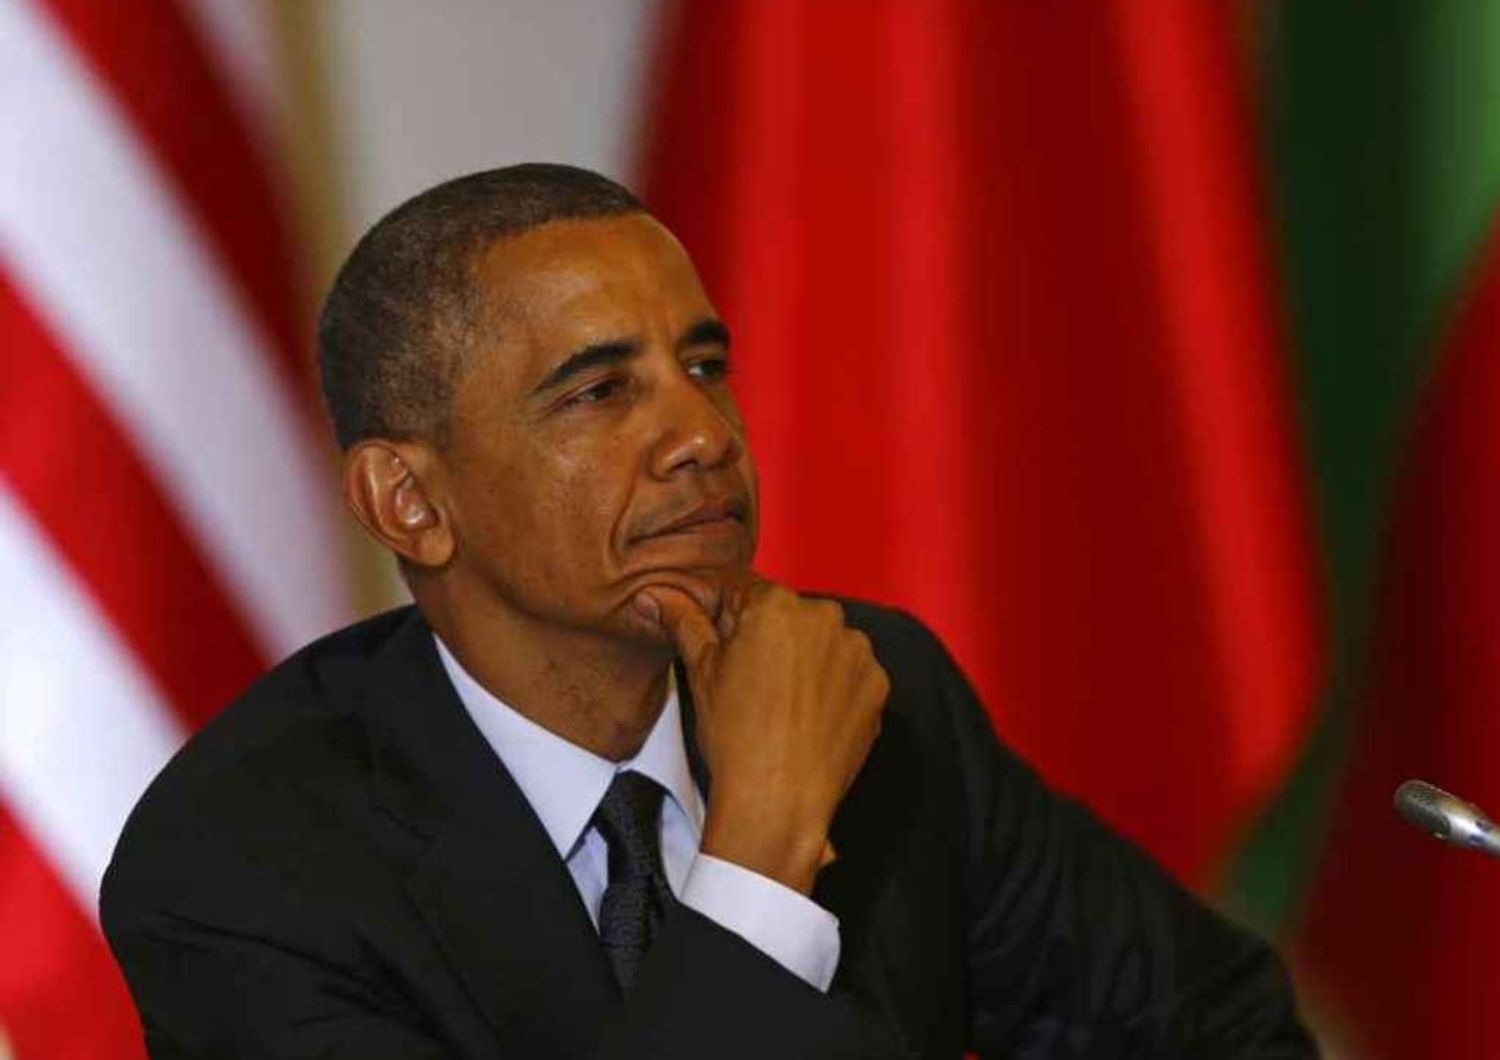 U. S. immigration needs solutions not theatrics, says Obama